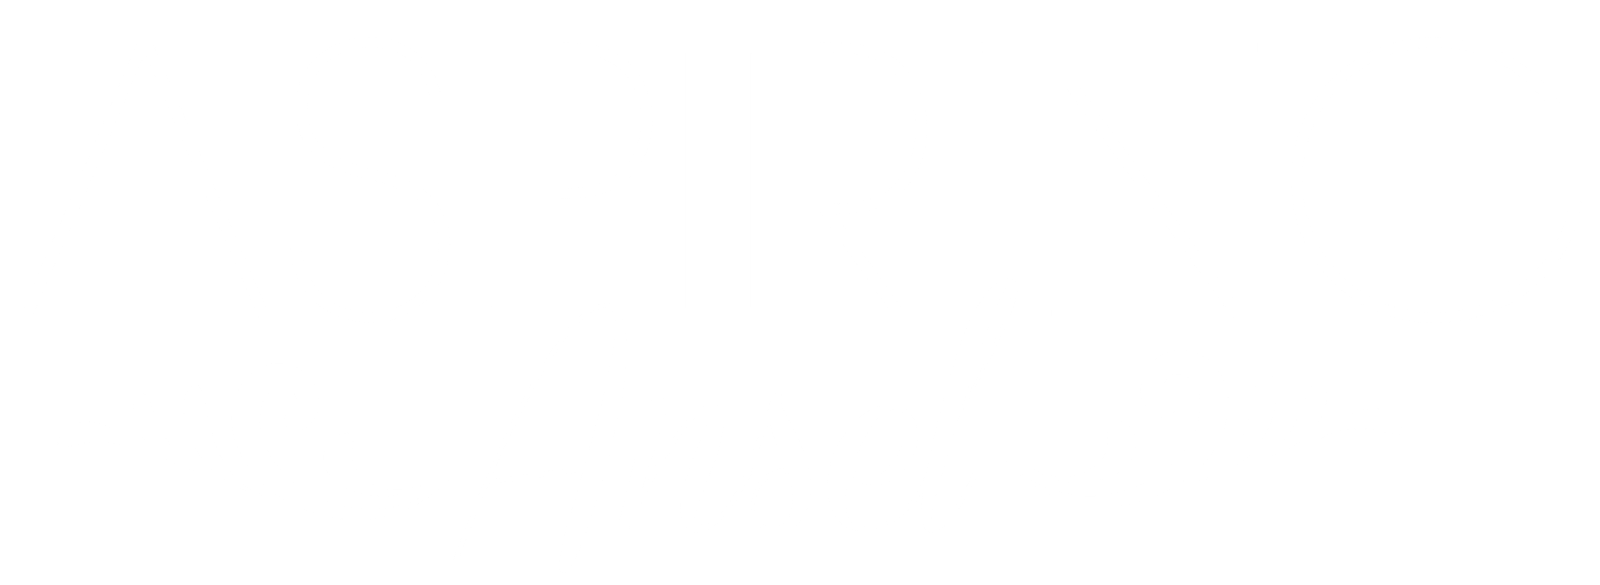 Aspiring Ansel